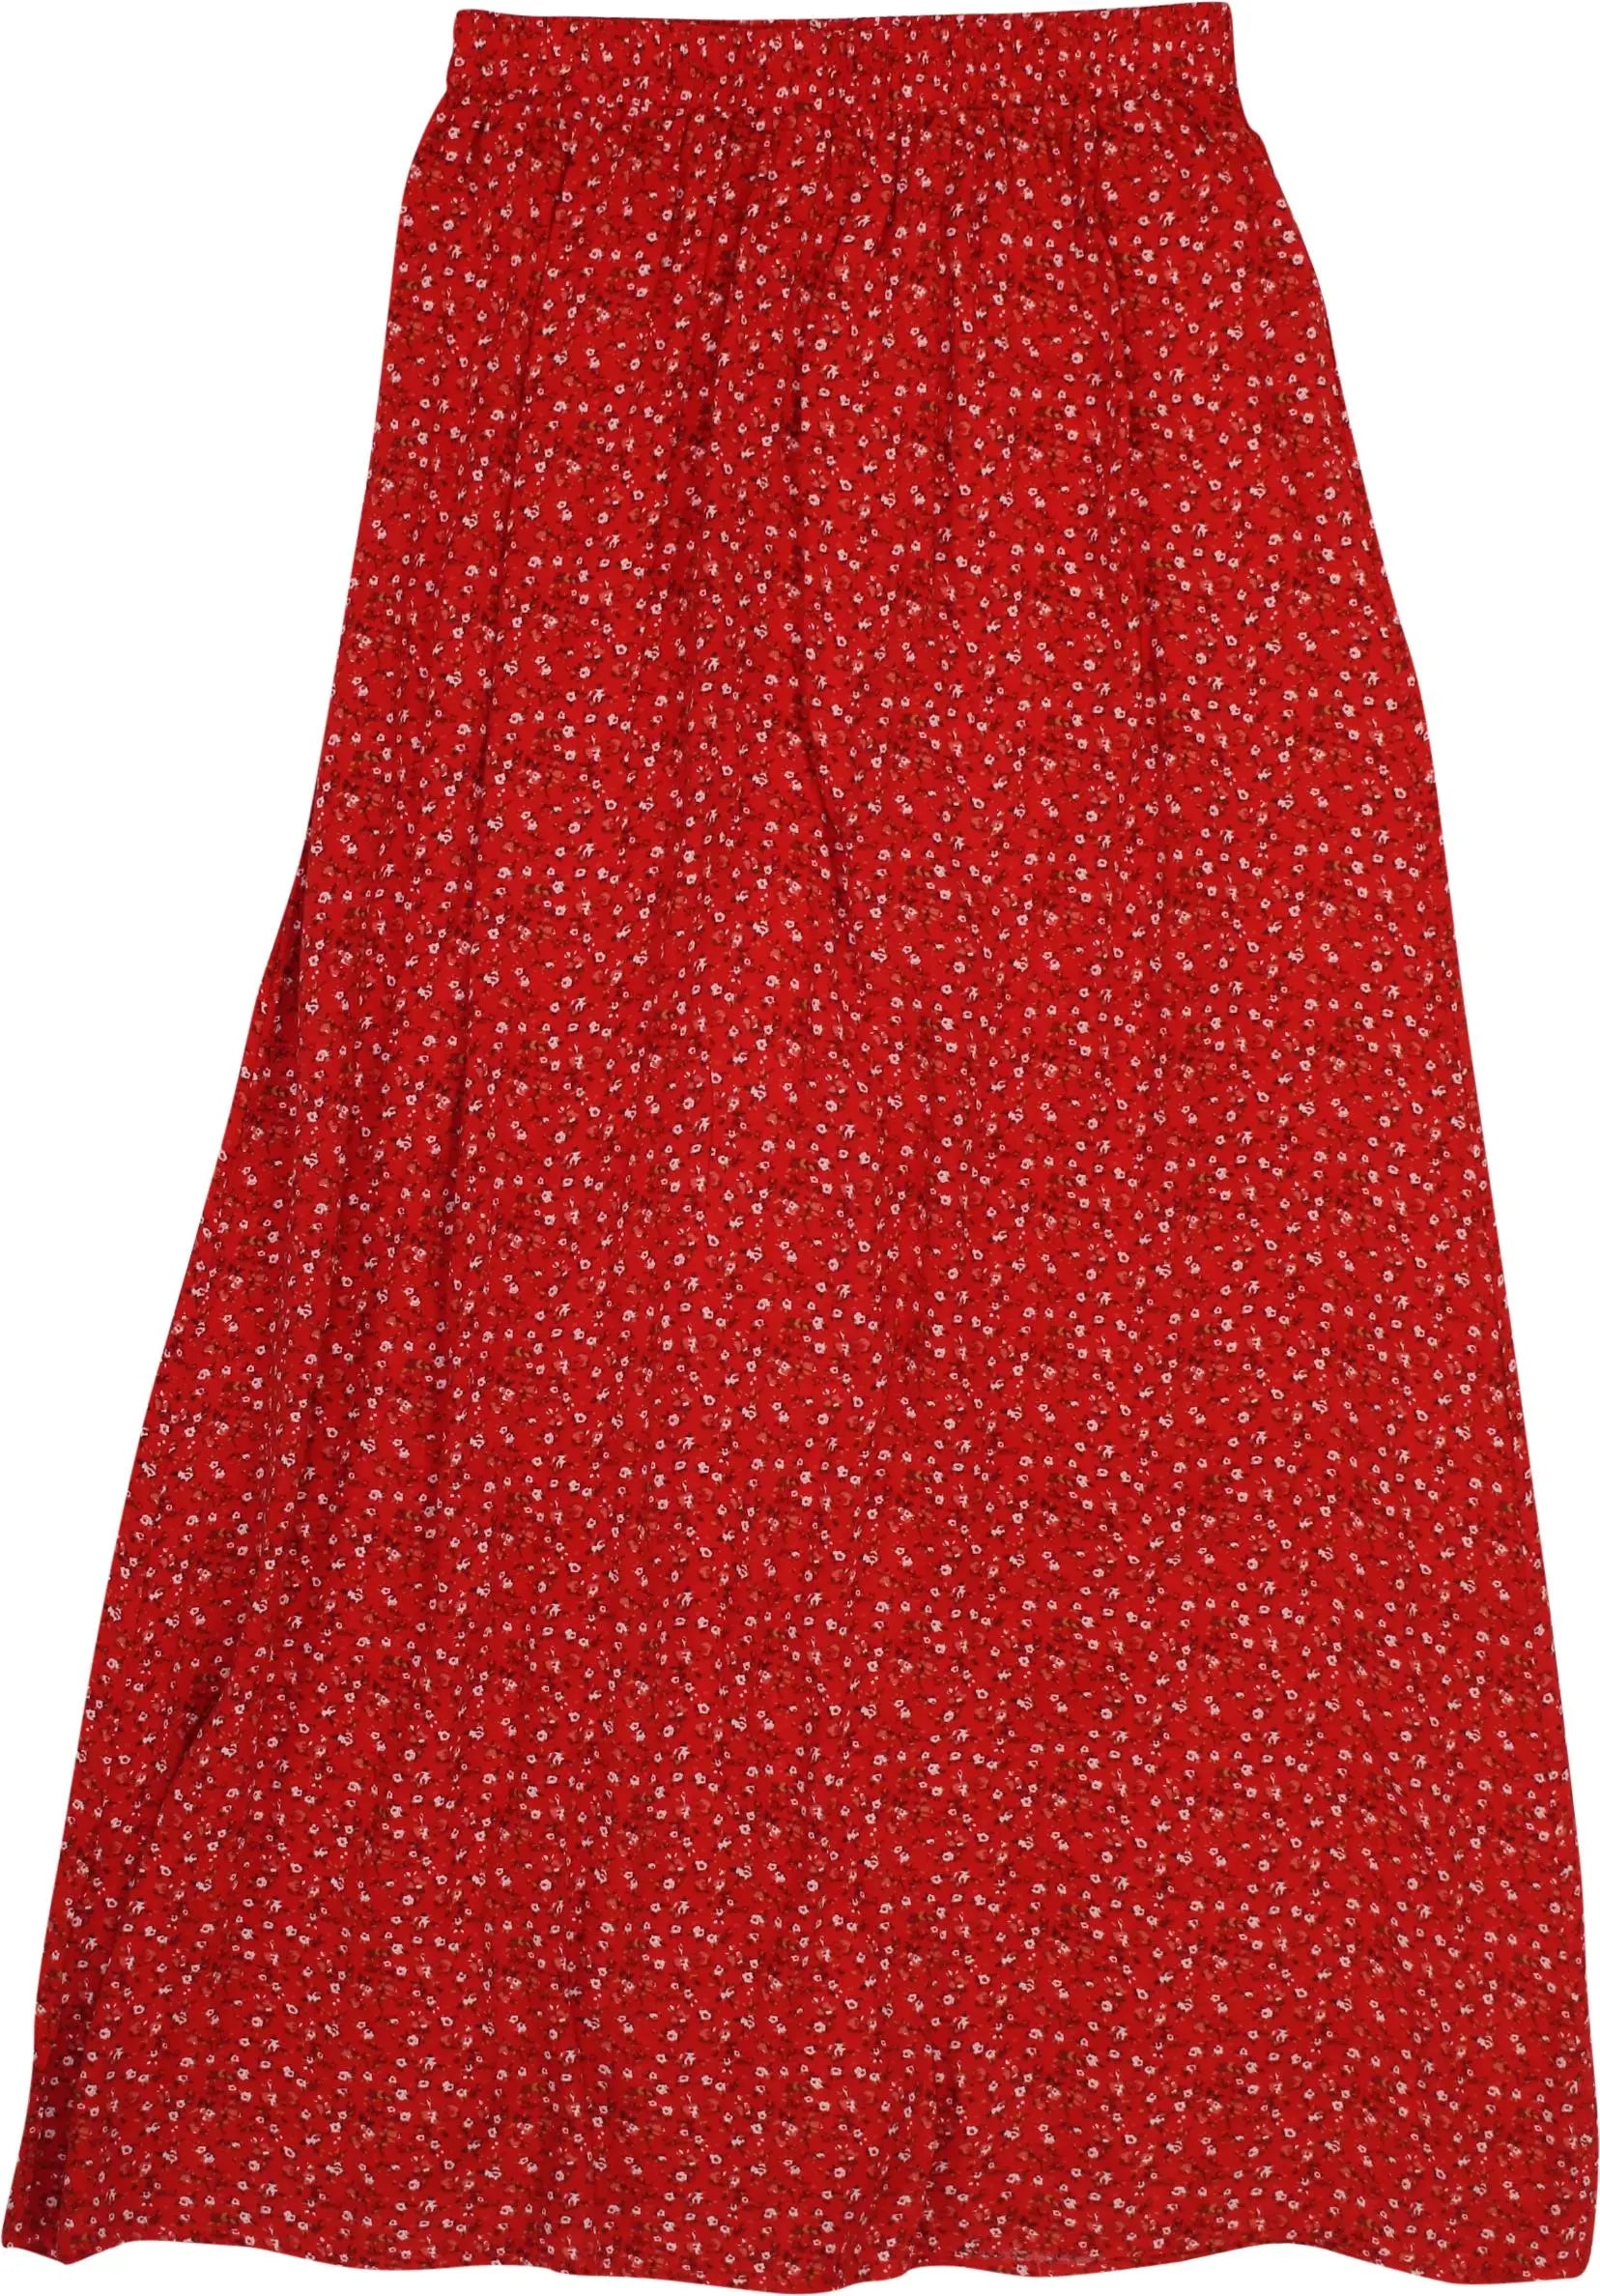 Vintage Dressing - Skirt- ThriftTale.com - Vintage and second handclothing